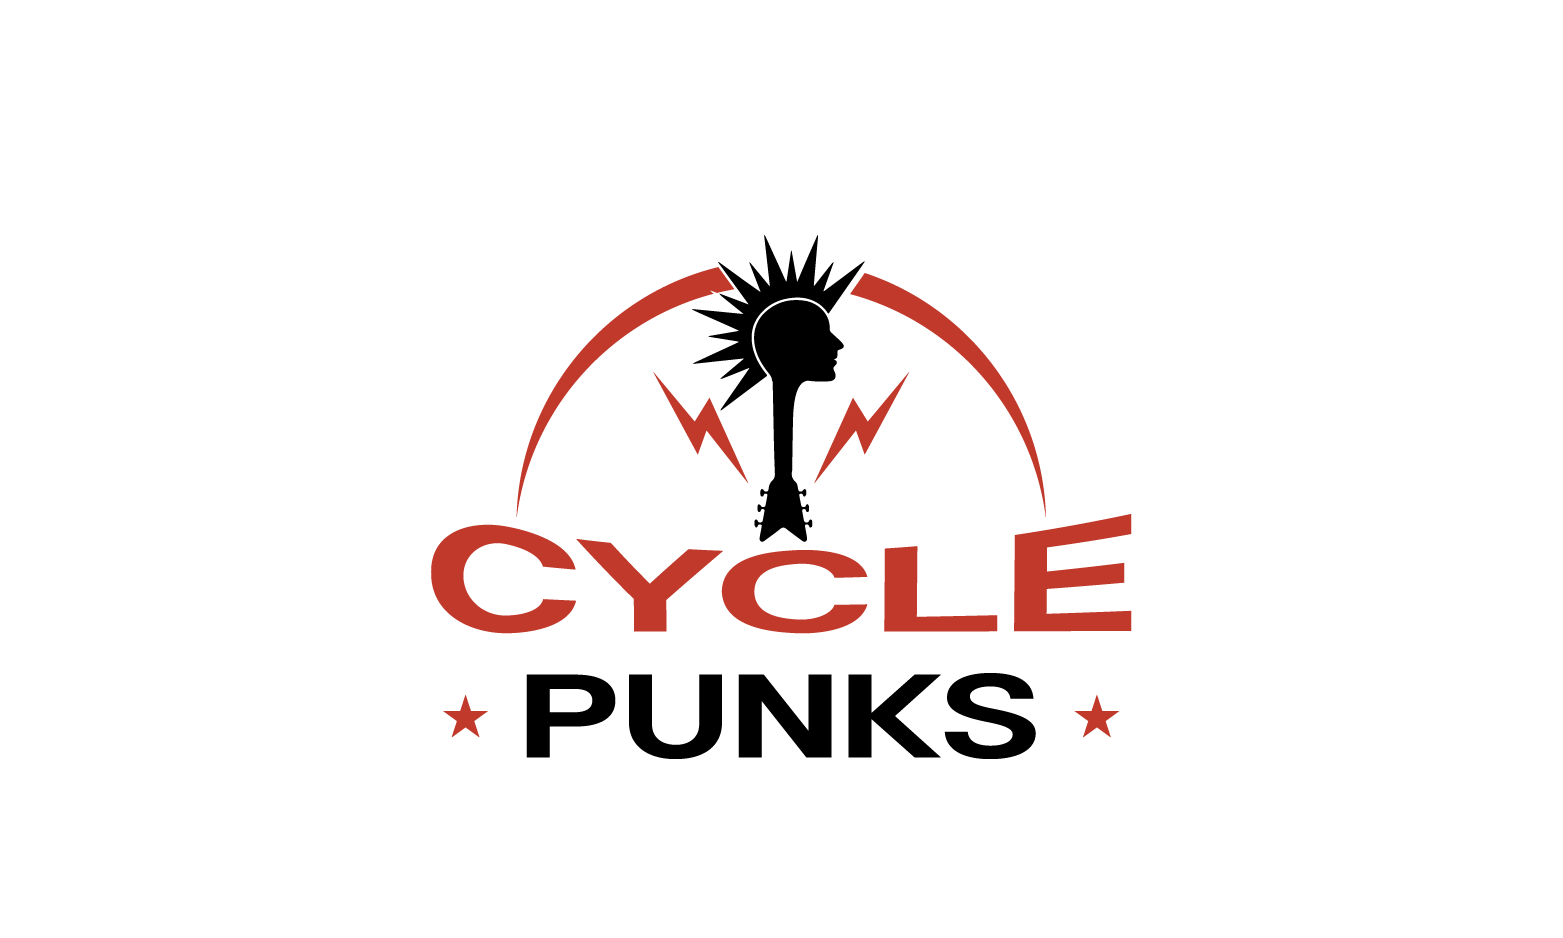 CyclePunks.com - Creative brandable domain for sale